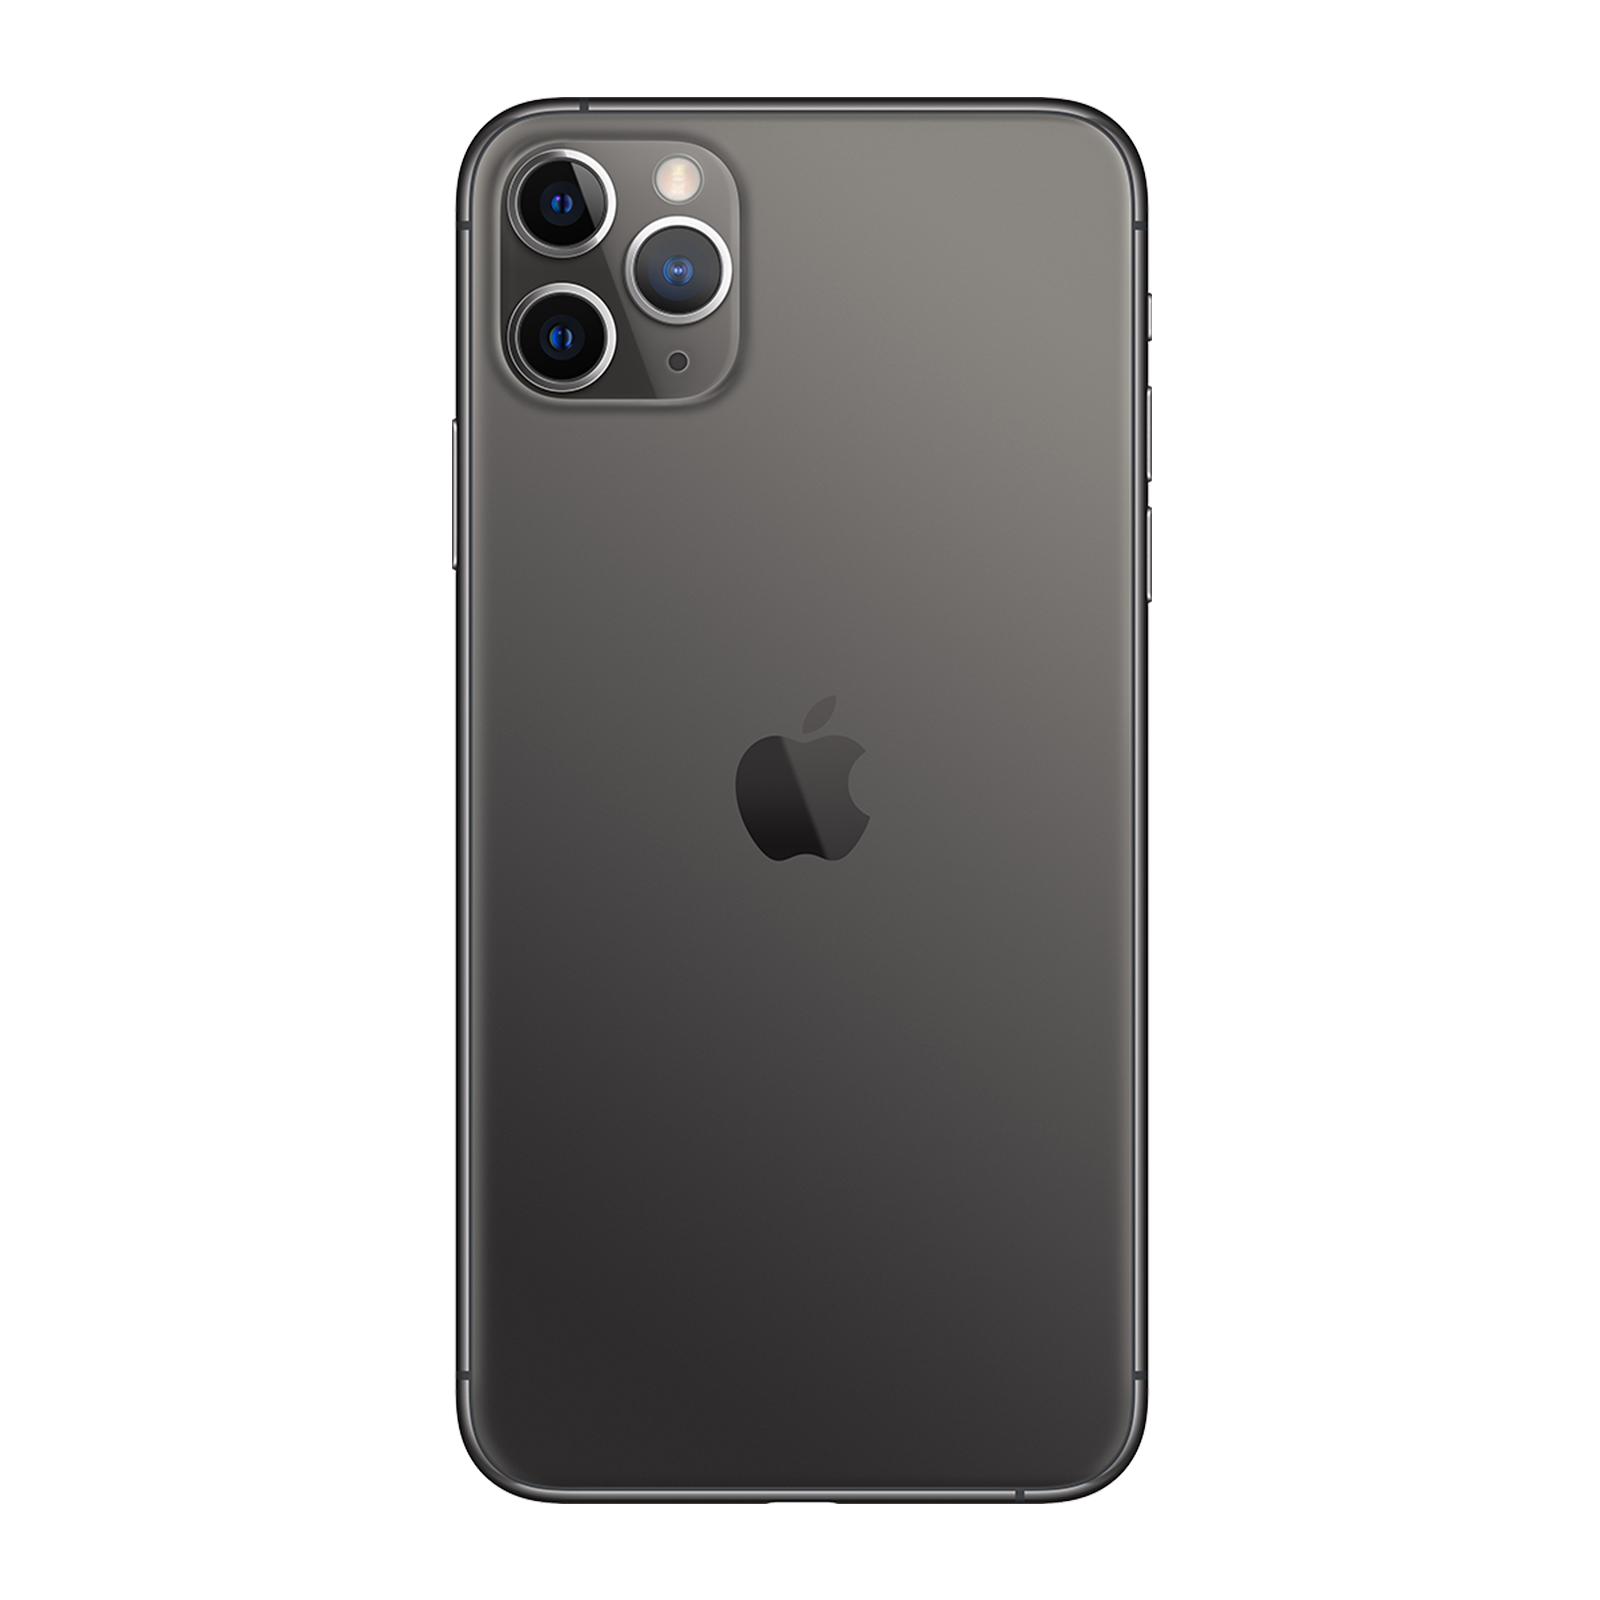 Apple iPhone 11 Pro Max 512GB Space Grey Pristine - Unlocked